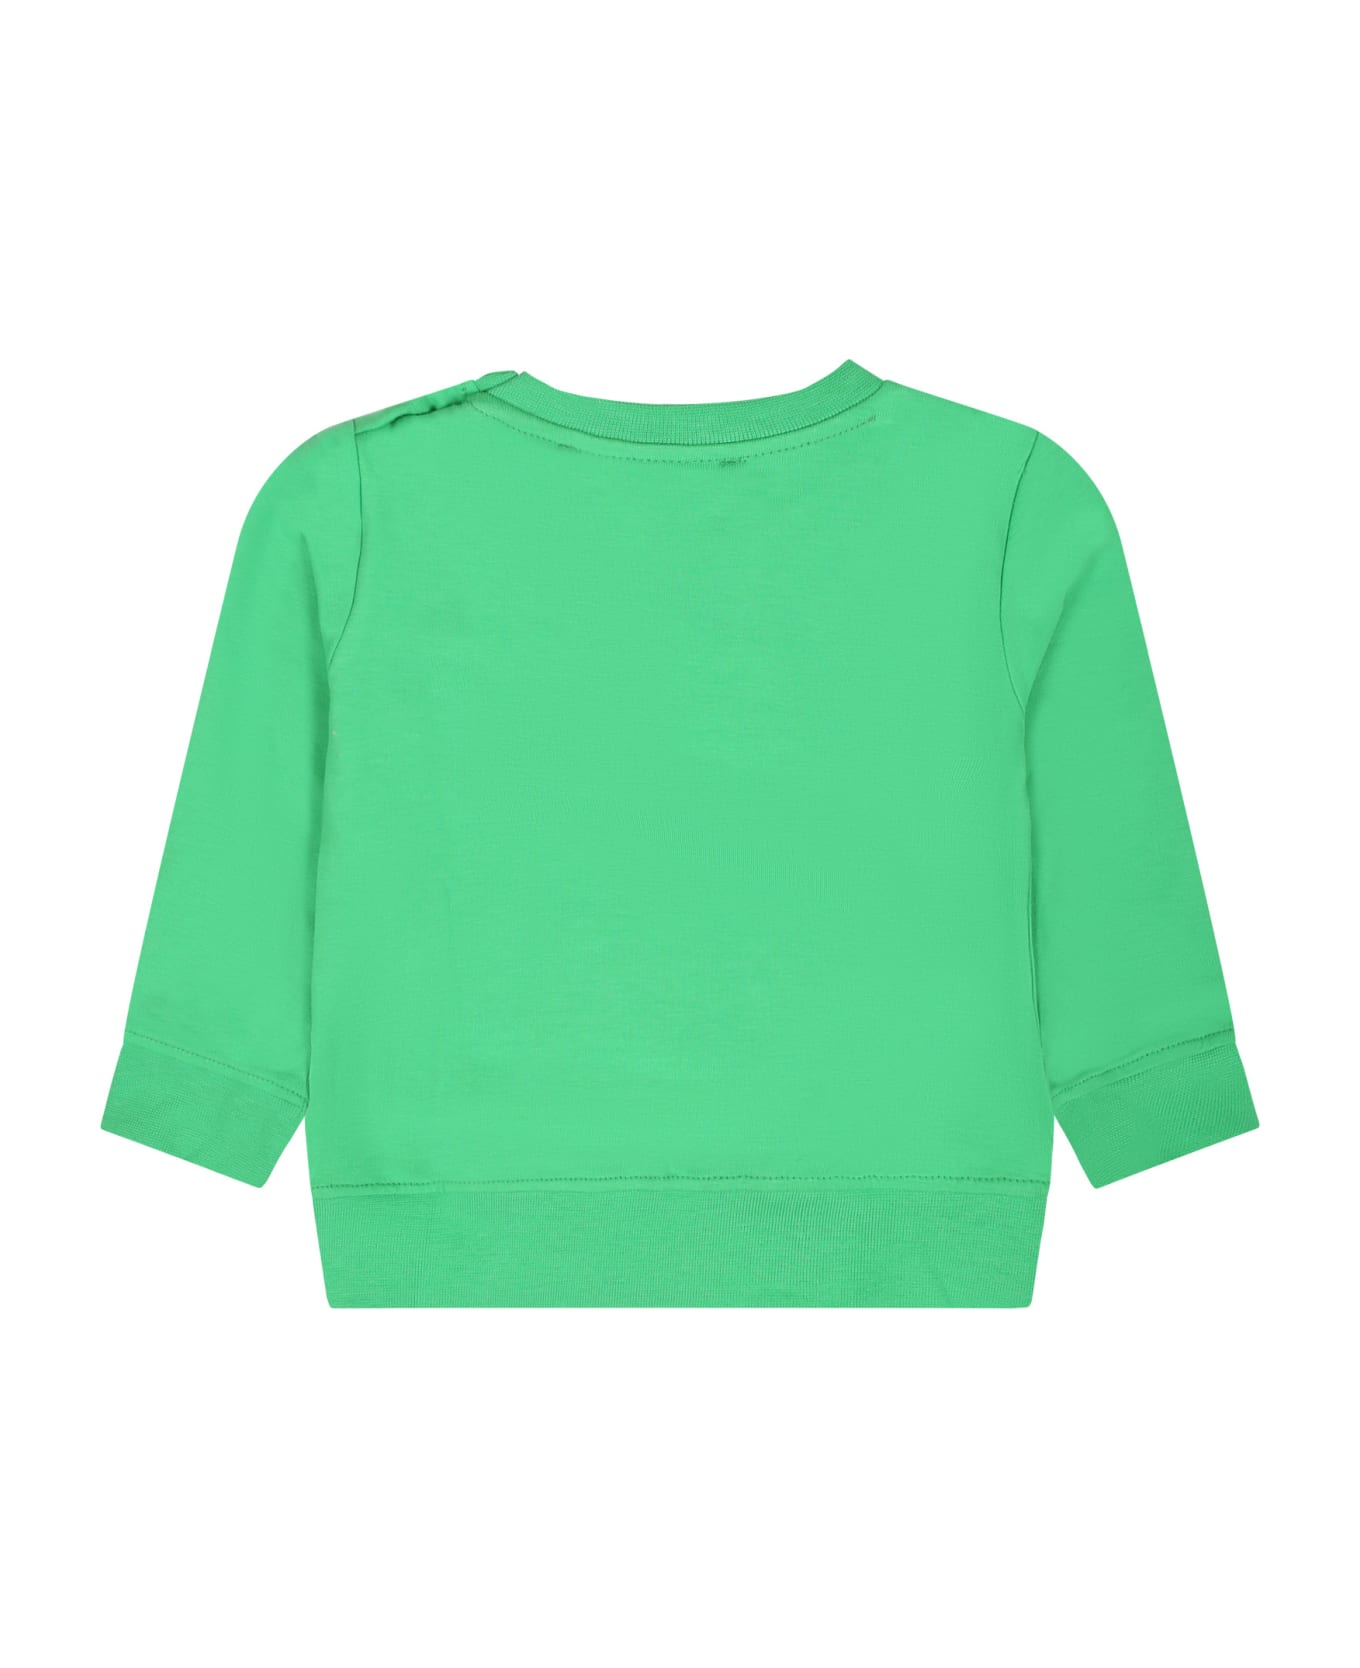 MSGM Green Sweatshirt For Baby Boy With Logo - Green